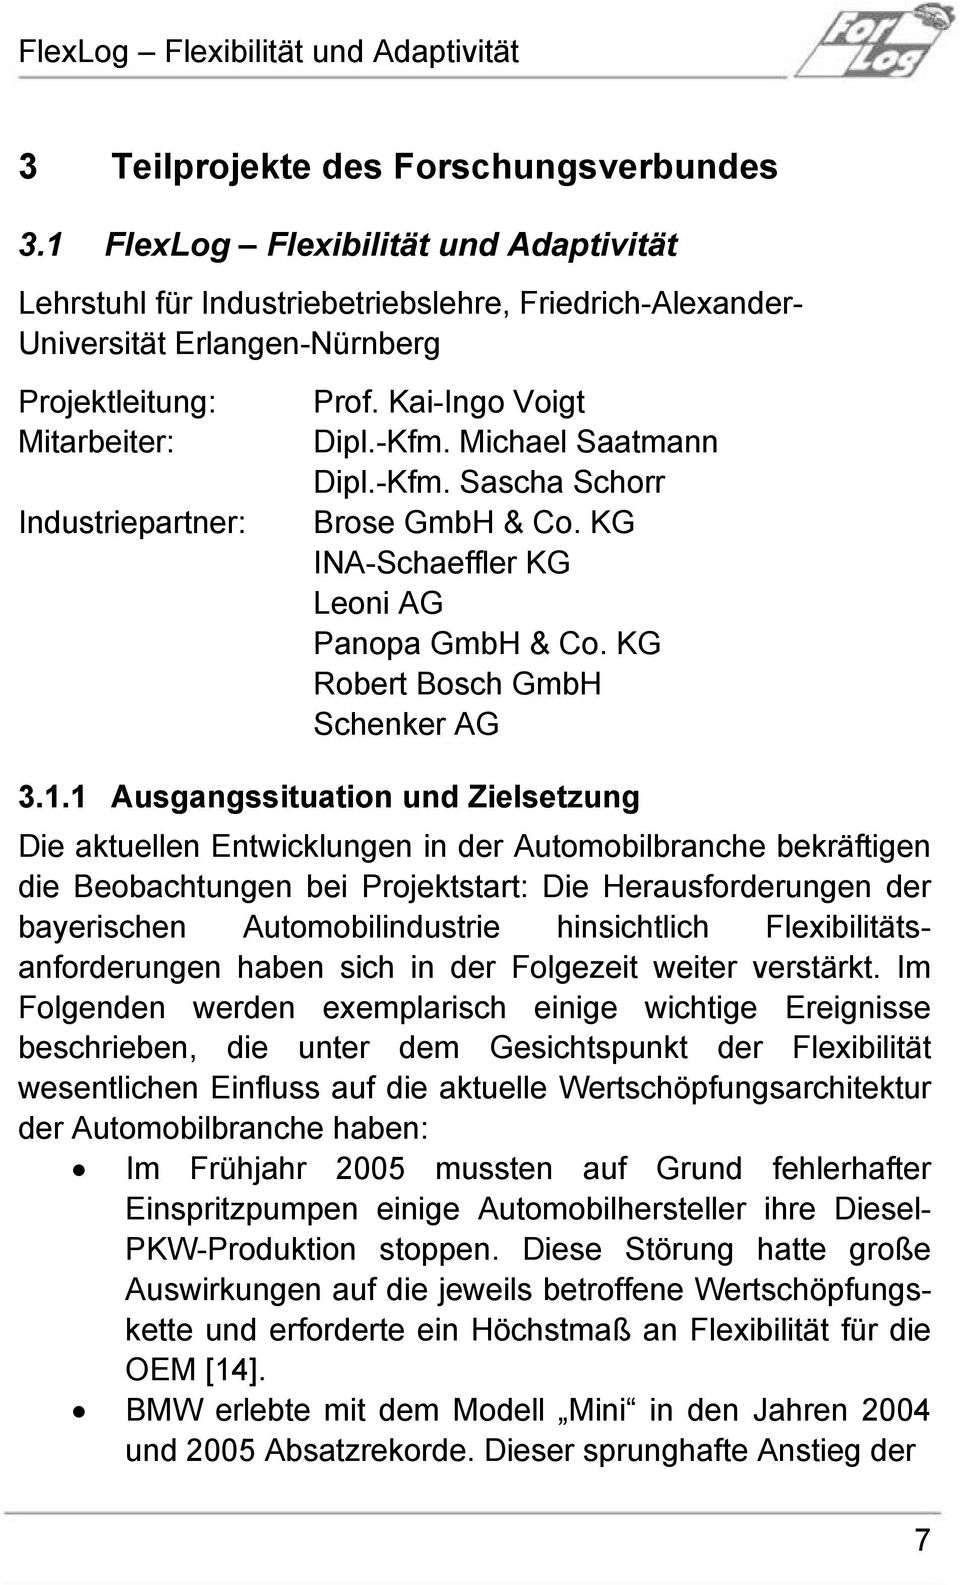 Kai-Ingo Voigt Dipl.-Kfm. Michael Saatmann Dipl.-Kfm. Sascha Schorr Brose GmbH & Co. KG INA-Schaeffler KG Leoni AG Panopa GmbH & Co. KG Robert Bosch GmbH Schenker AG 3.1.